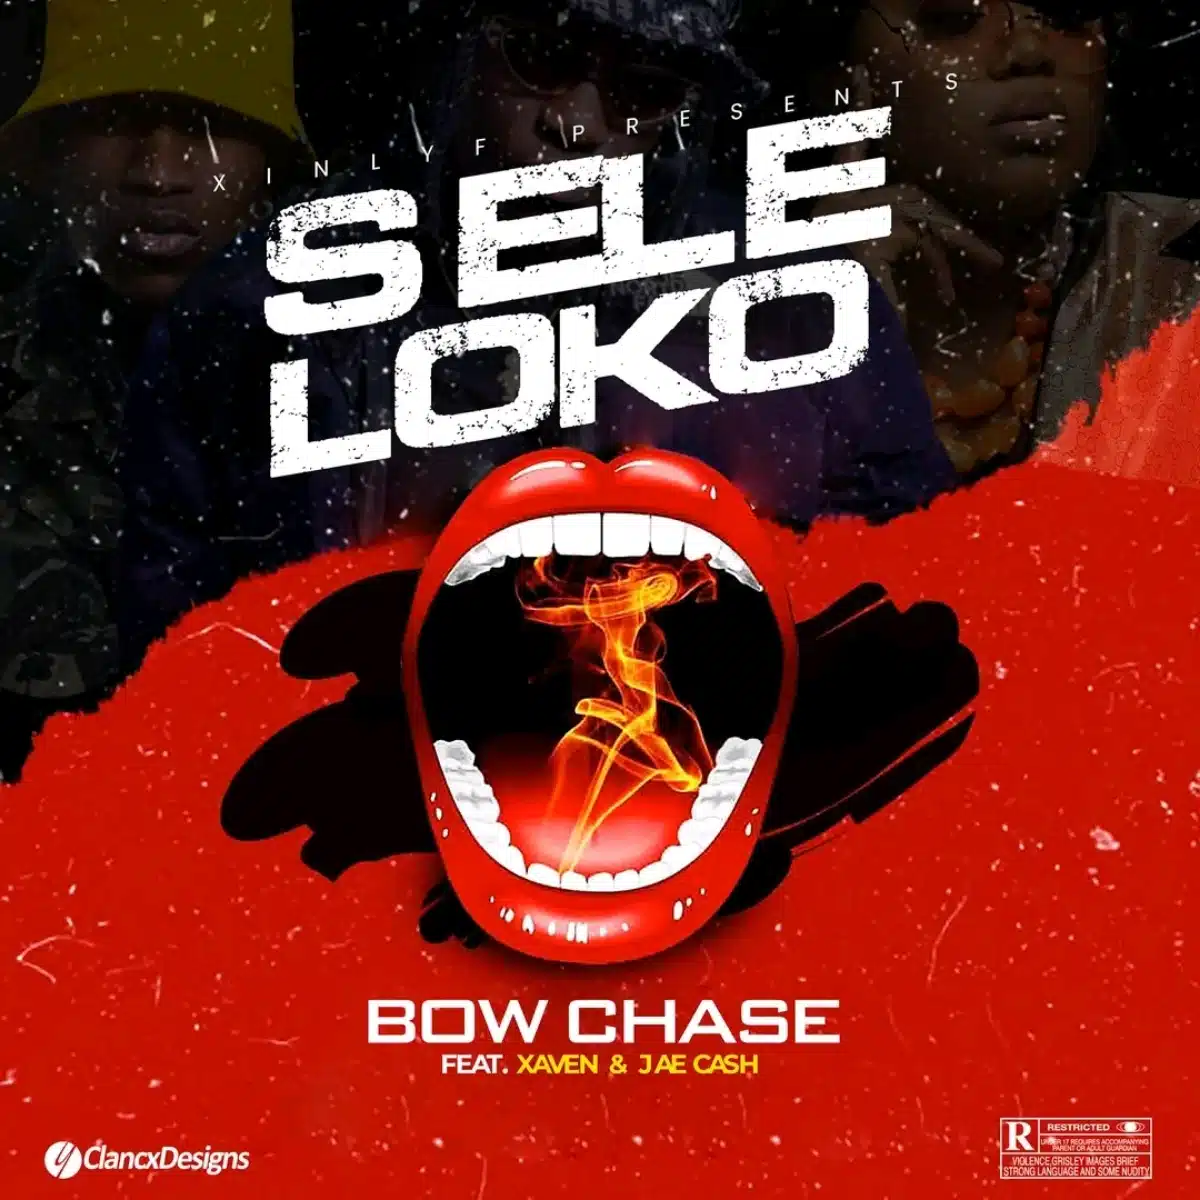 DOWNLOAD: Bow Chase Ft. Xaven & Jae Cash – “Seleloko” Mp3